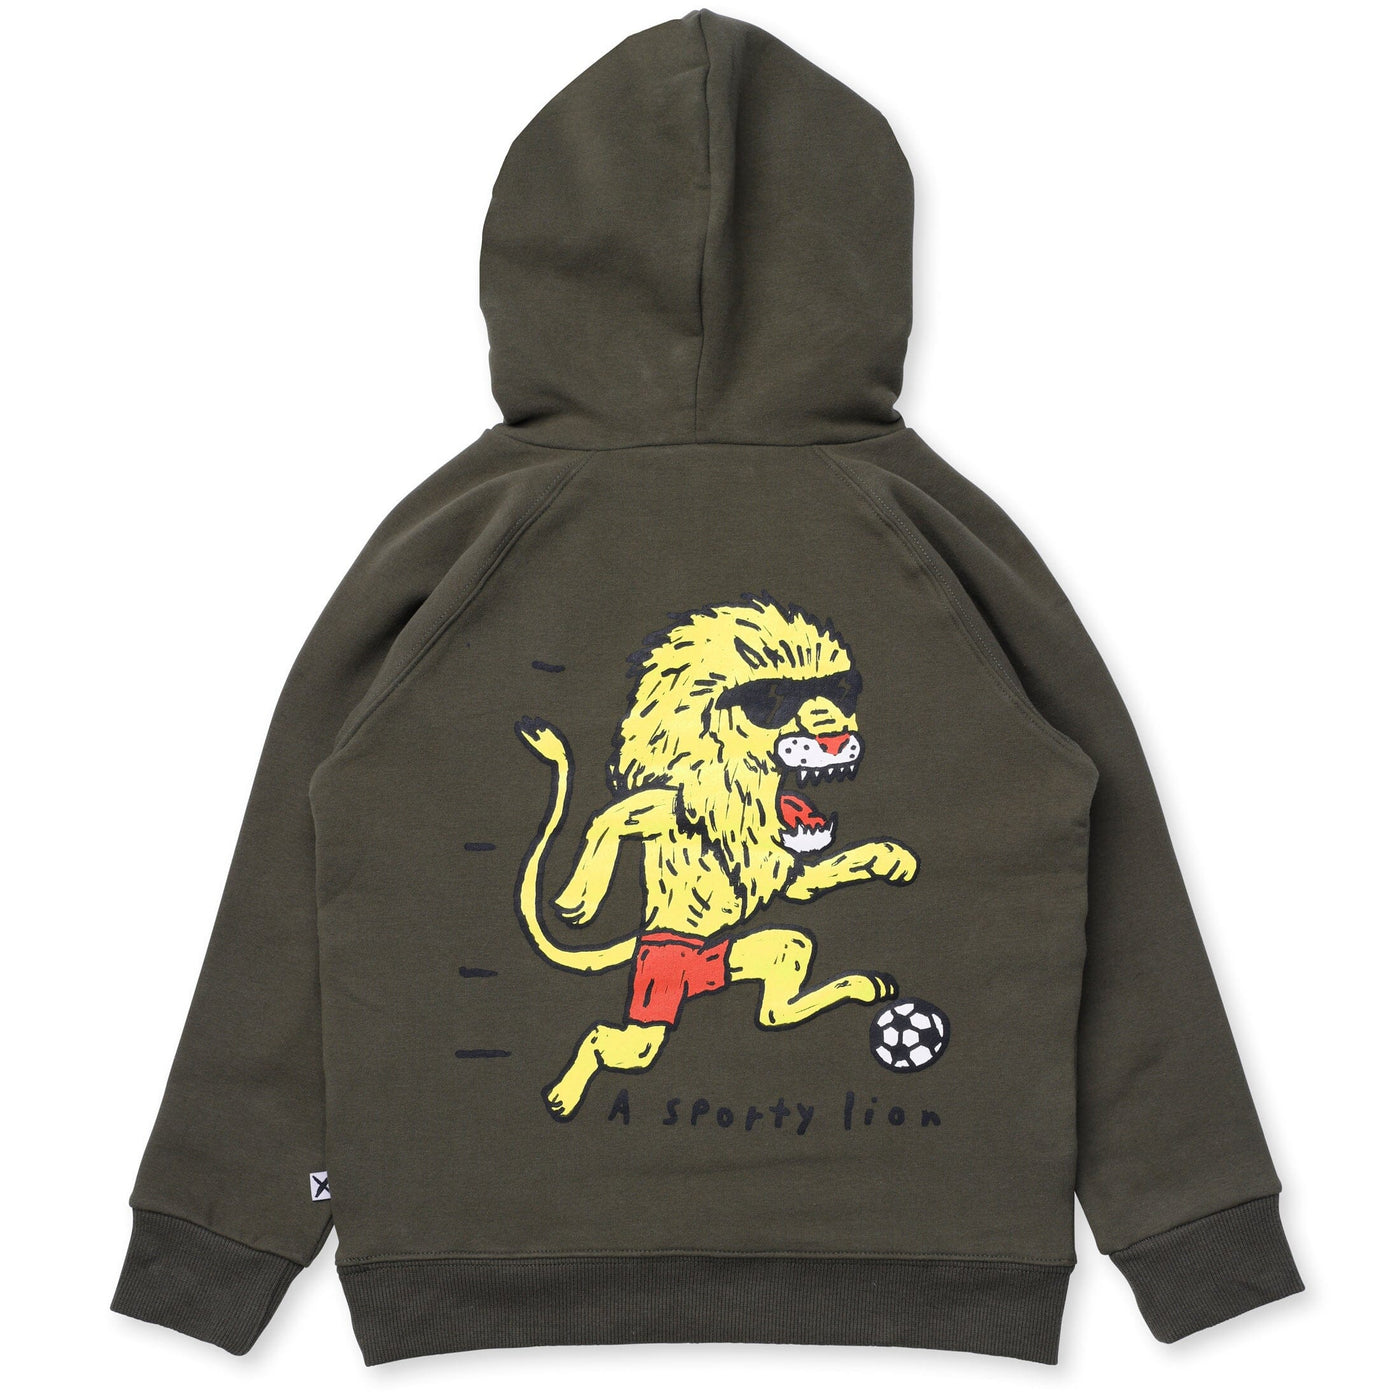 Minti A Sporty Lion Furry Hood - Khaki Hoodie Minti 